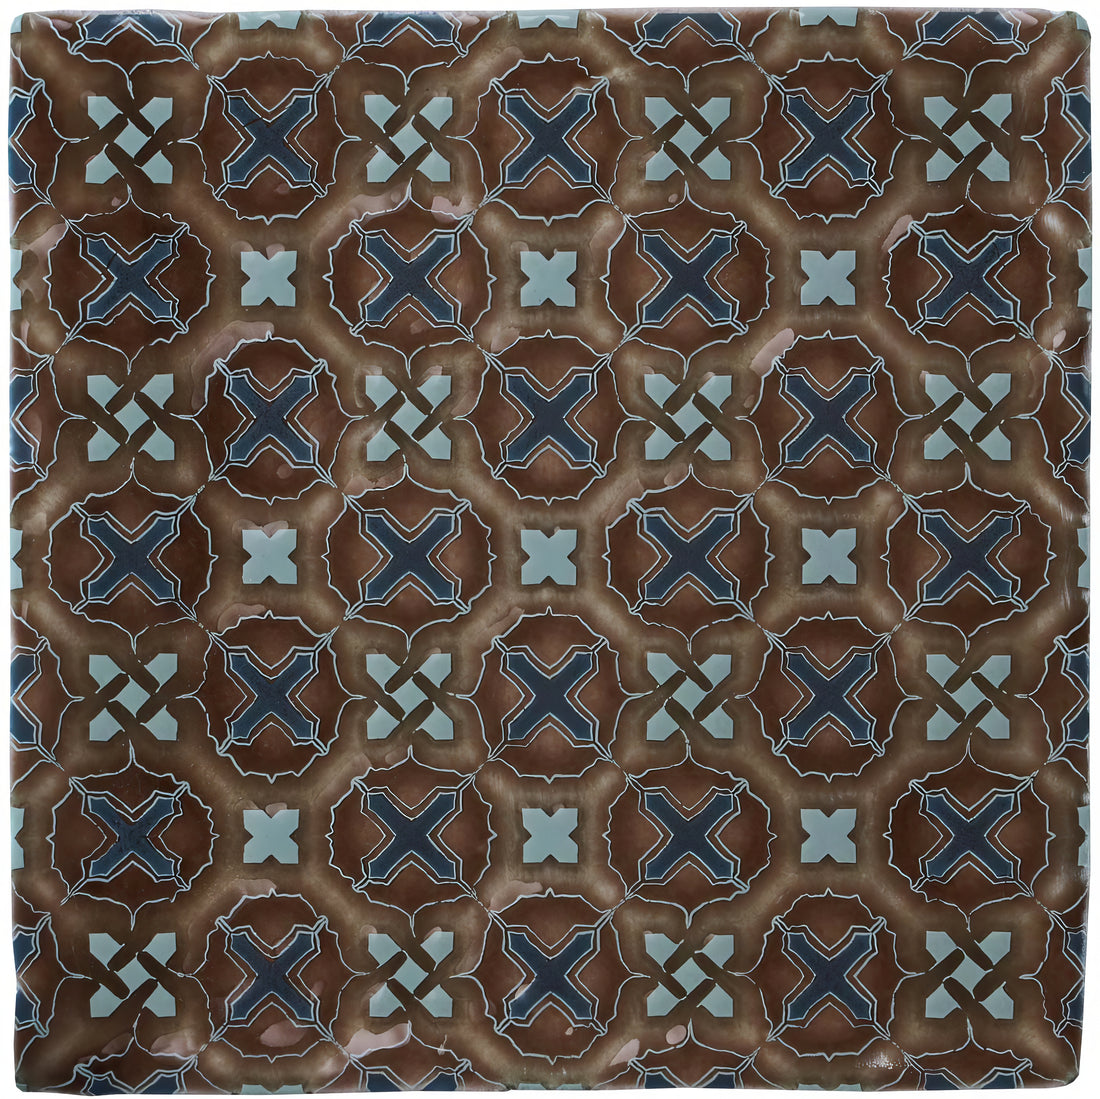 Ormeaux on Chestnut - Hyperion Tiles